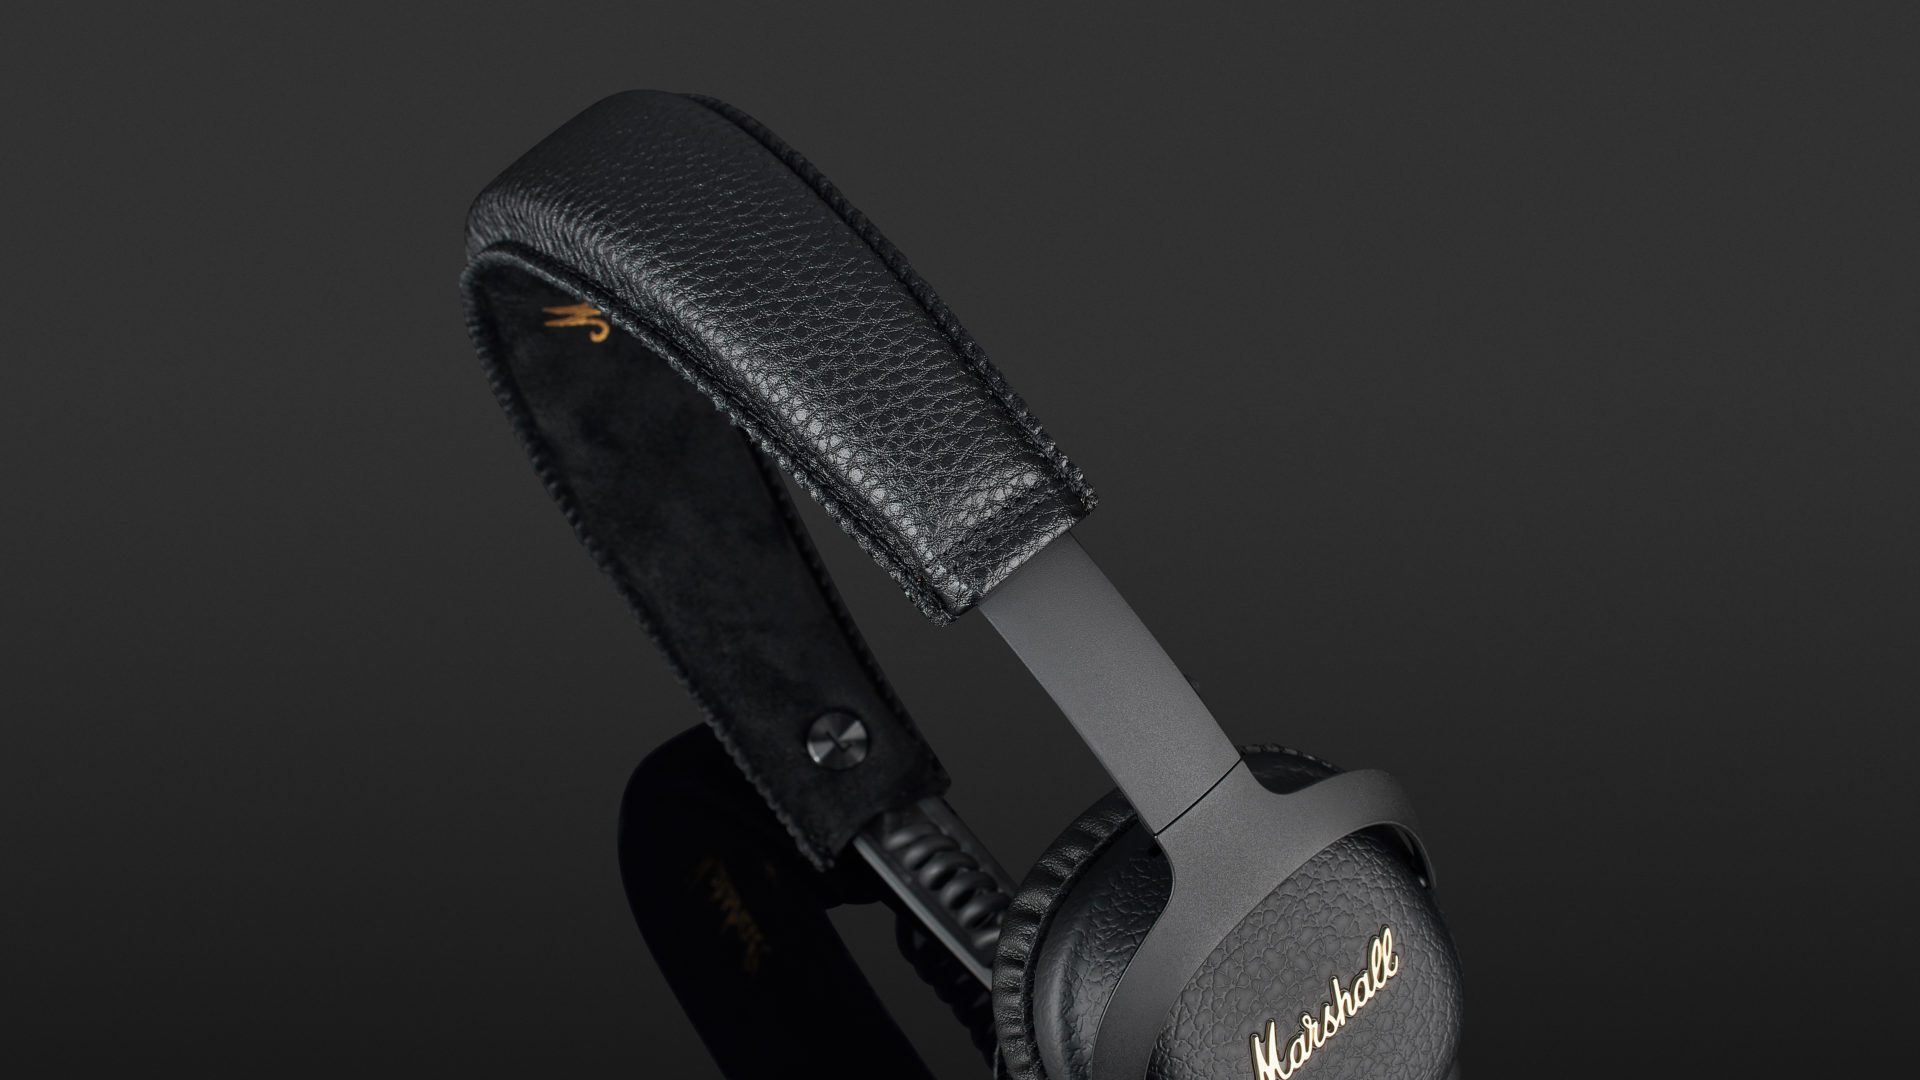 Marshall Mid Bluetooth, Review y Análisis Auriculares Diadema, MA